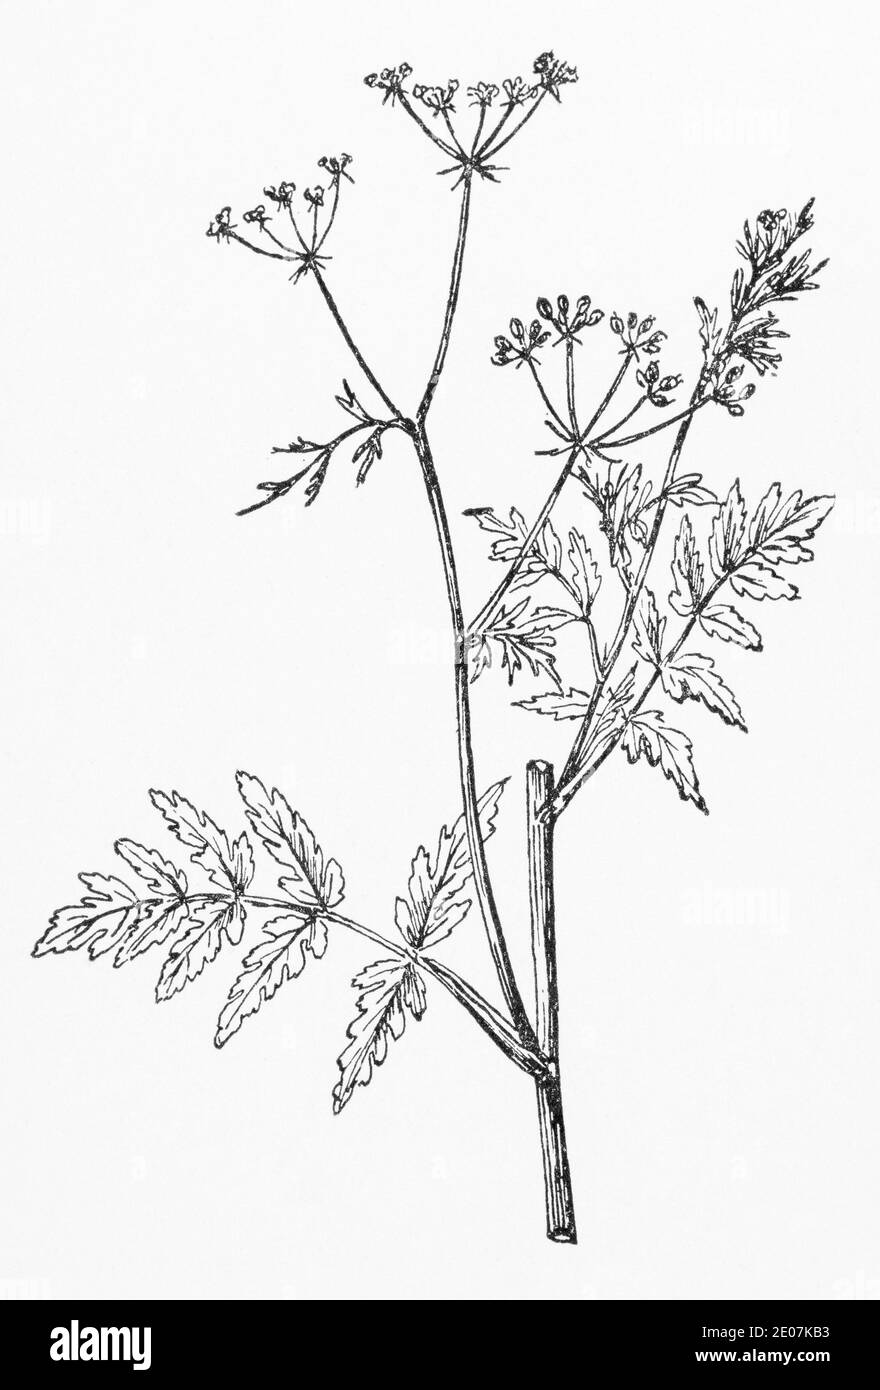 Old botanical illustration engraving of Stone Parsley / Sison amomum. Drawings of British umbellifers.  Traditional medicinal herbal plant. See Notes Stock Photo